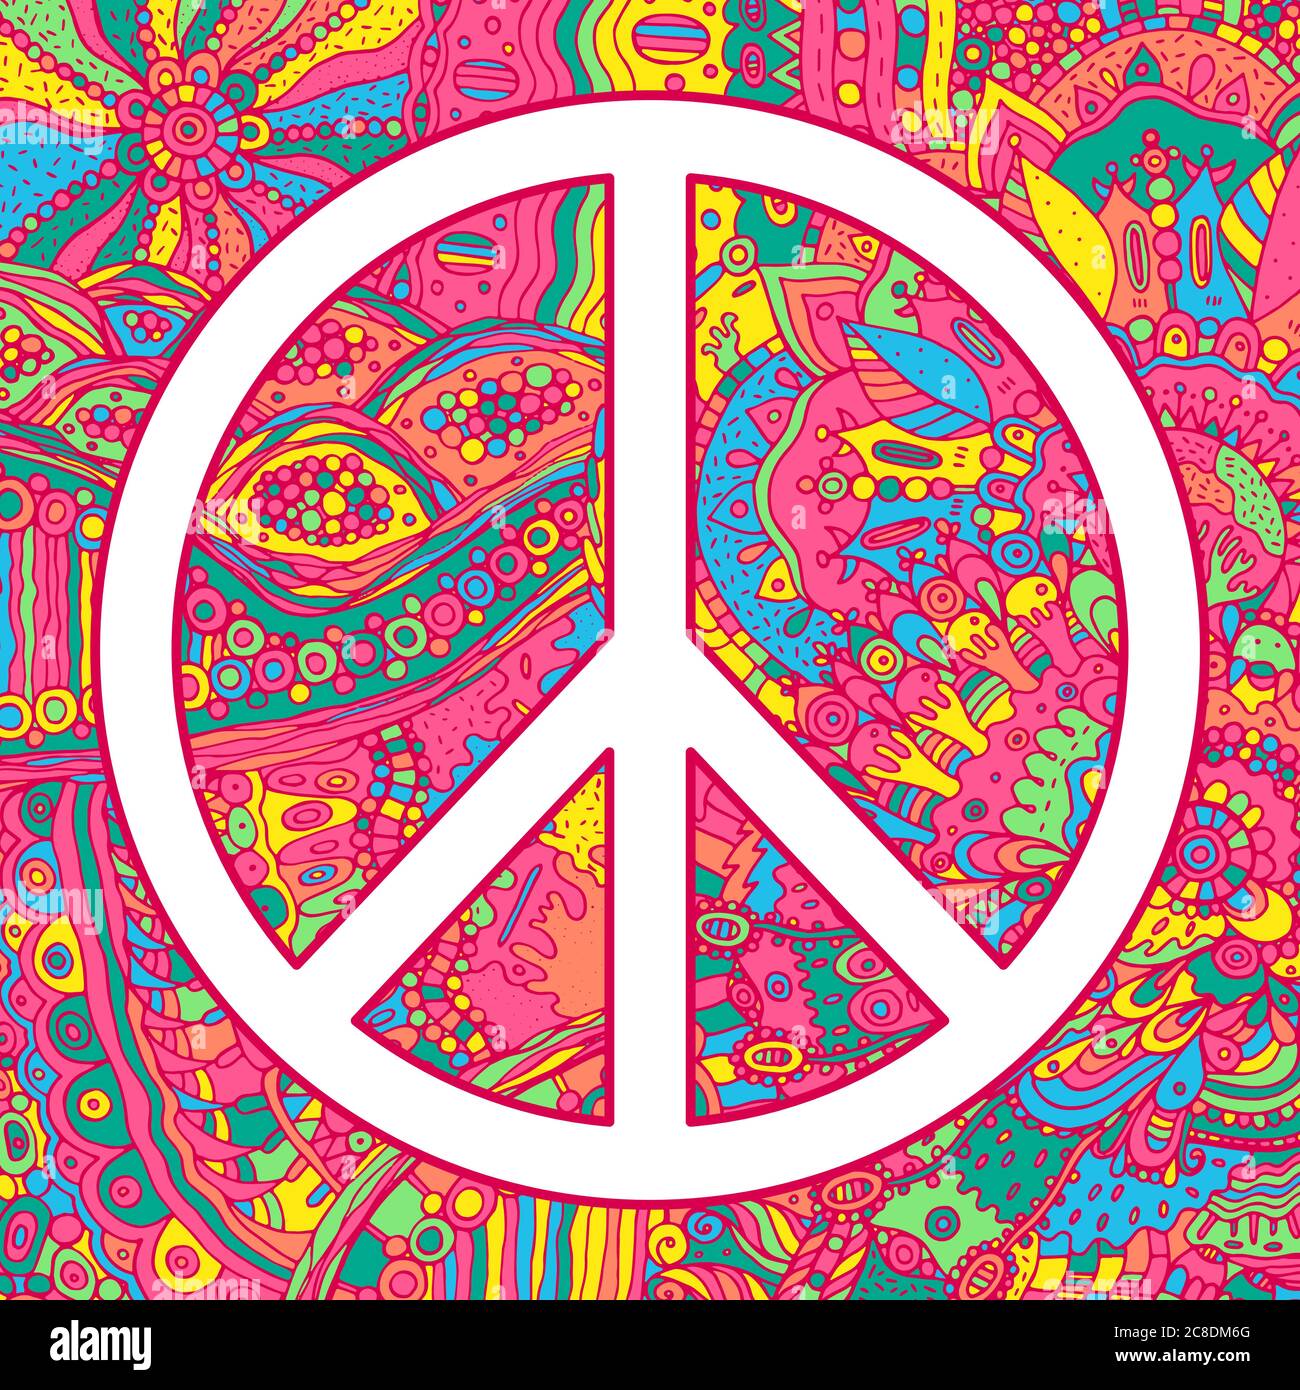 Neonfarben. Pacific Symbol - Hippie 60s Festival Poster. Psychedelisch helle Illustration. Vektordesign. Retro Poster.Bunte Friedensschild Kunstwerk. Stock Vektor